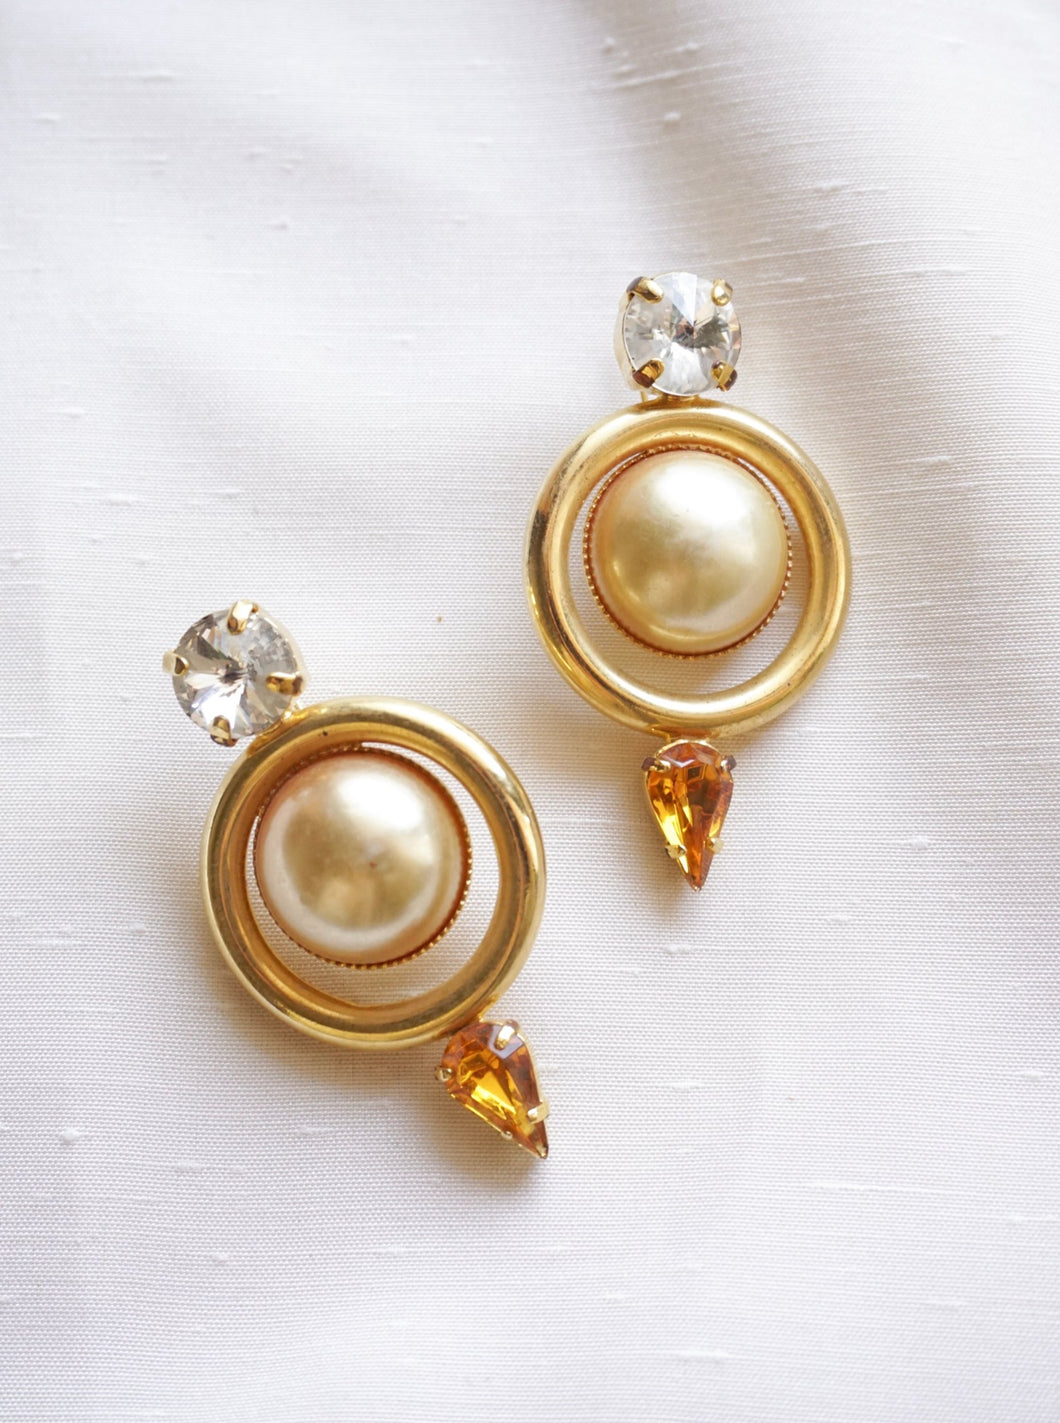 Baroque earrings with orange rhinestones